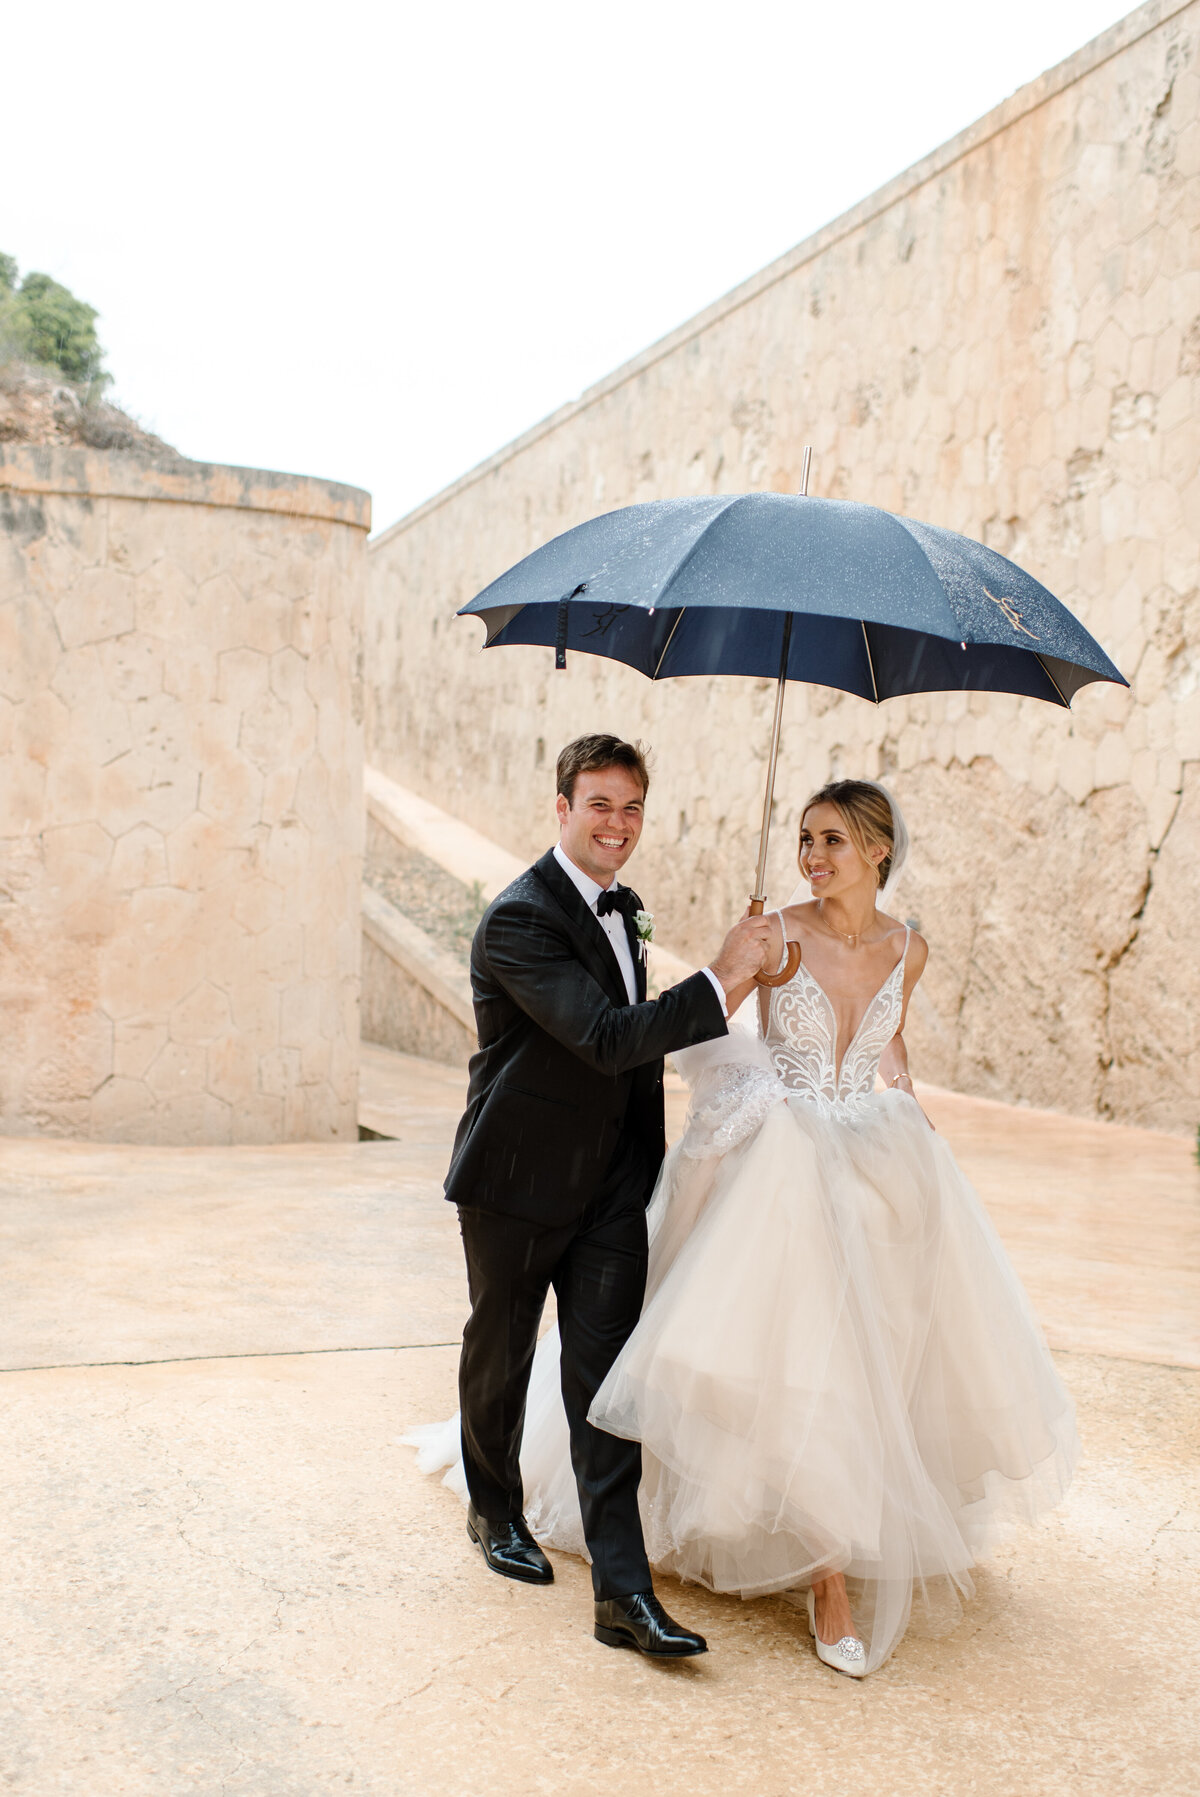 wedding photo in the rain at cap rocat mallorca